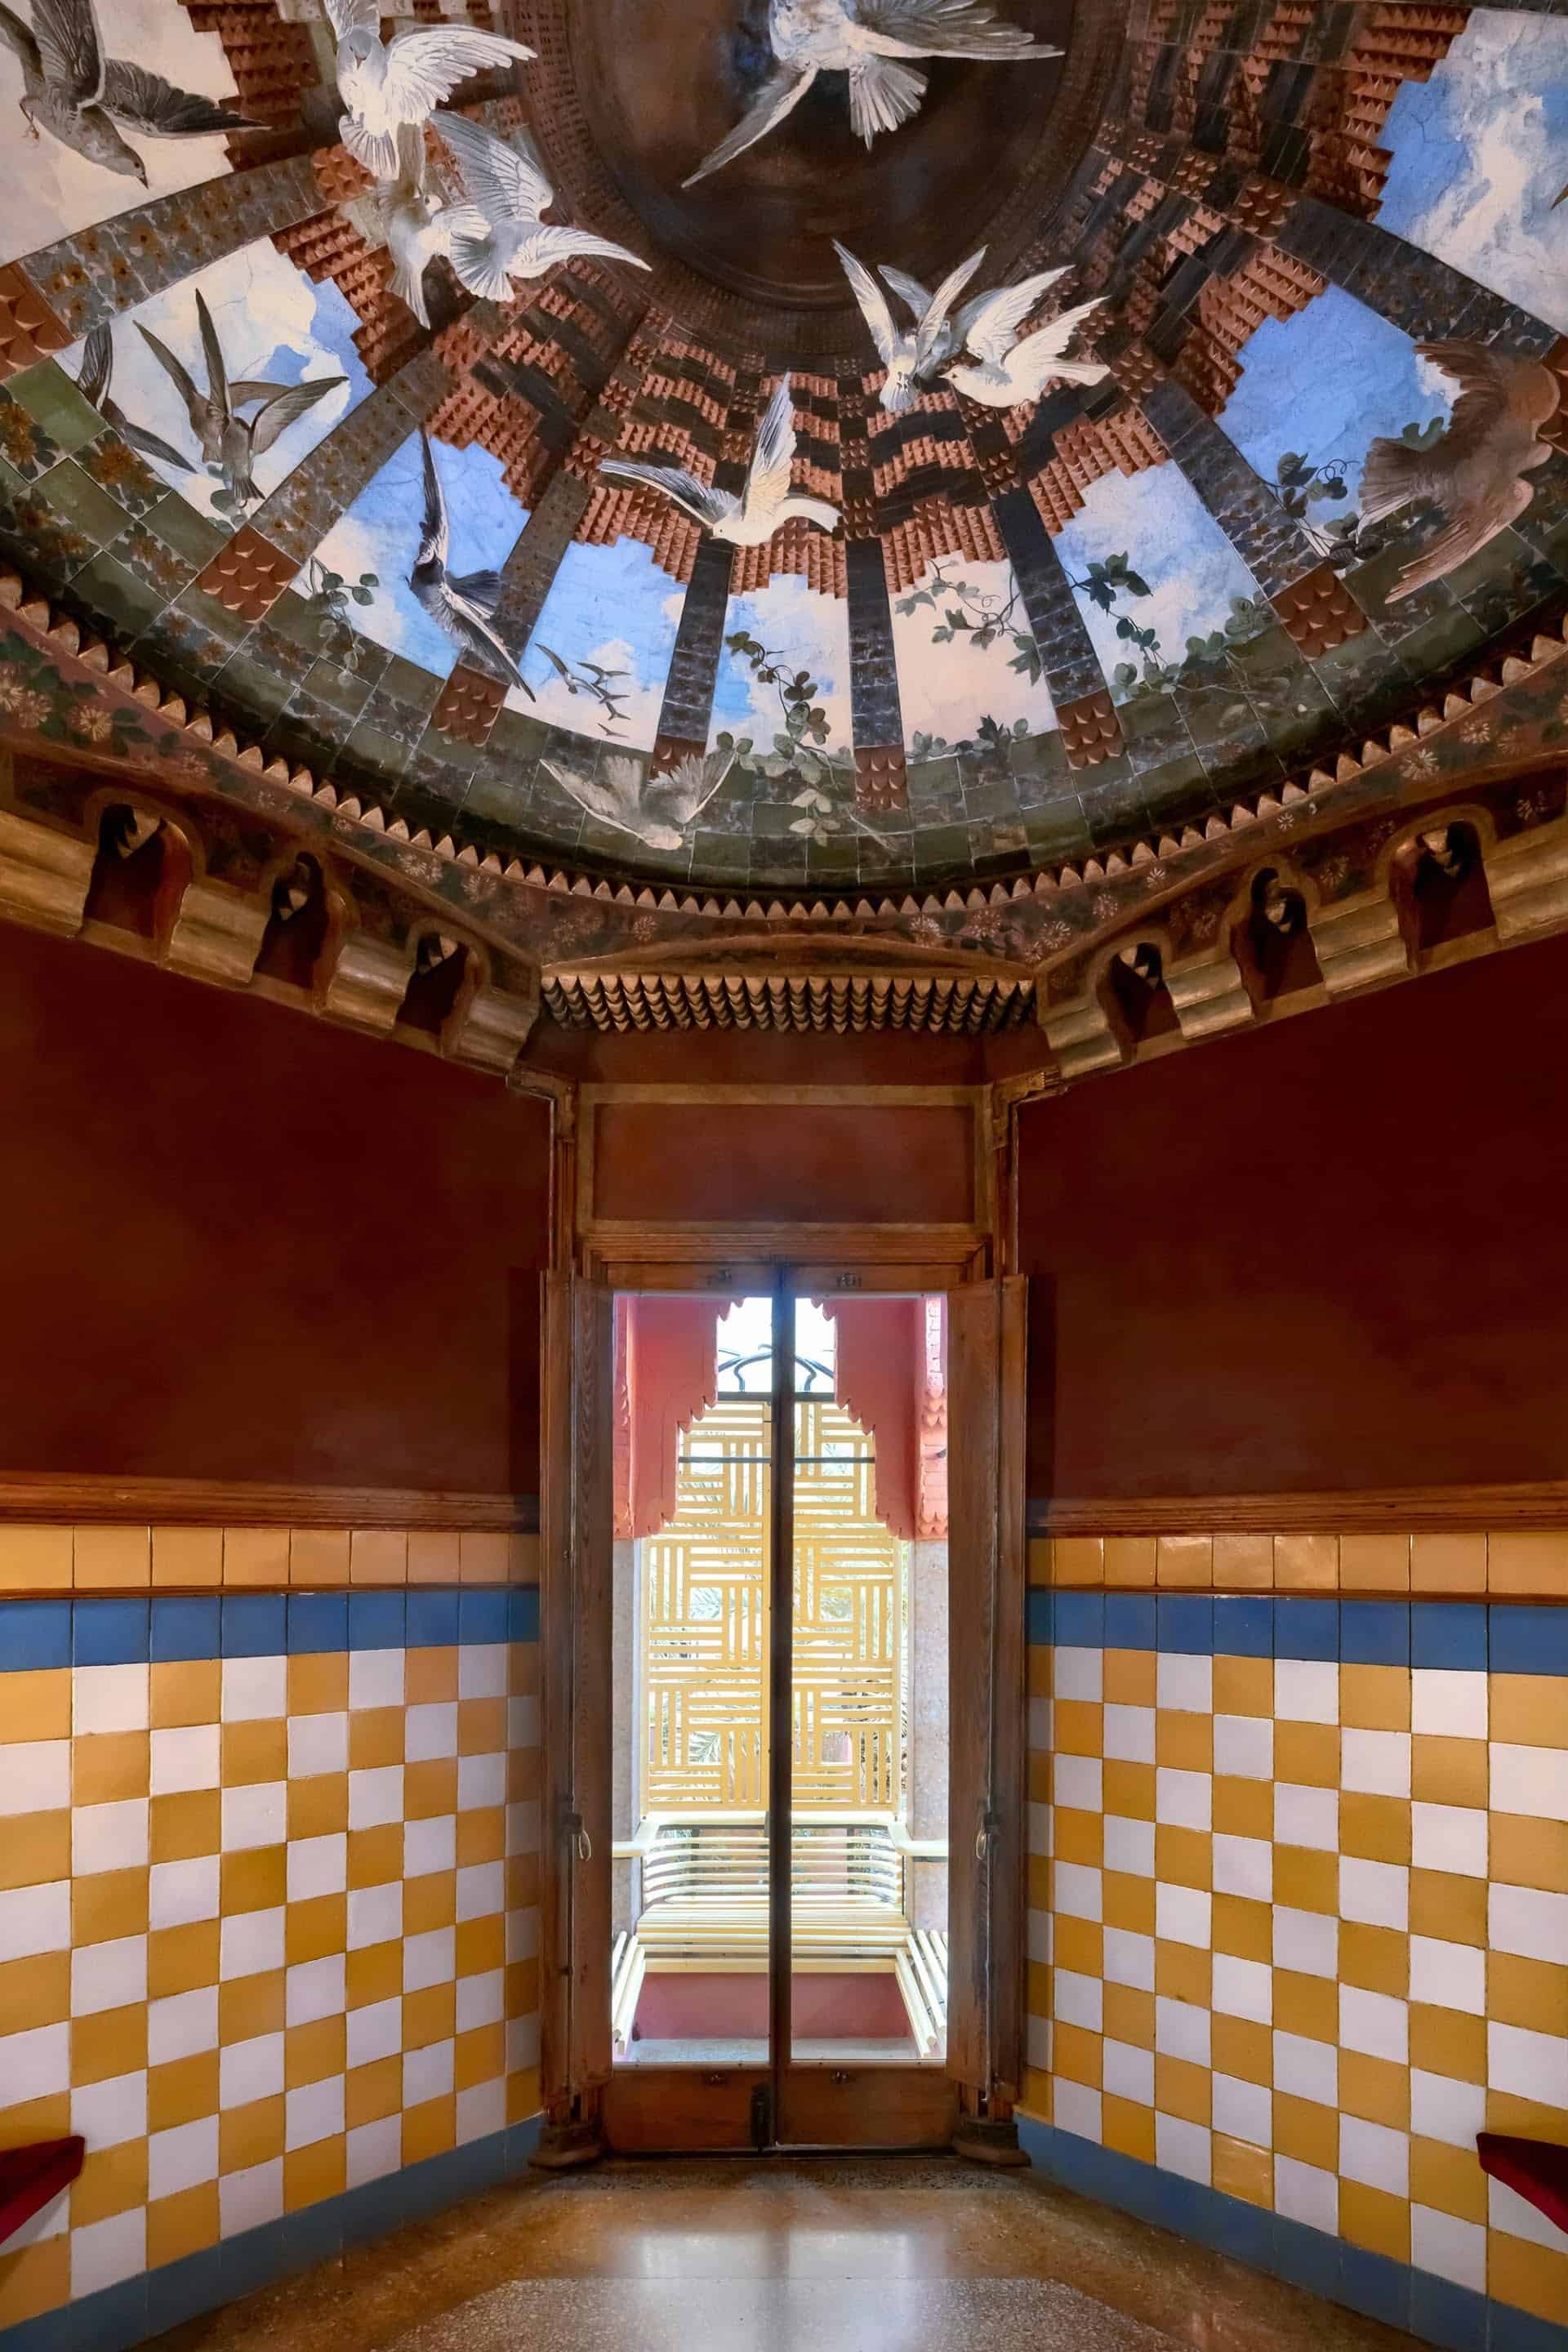 Casa Vicens van Antoni Gaudí